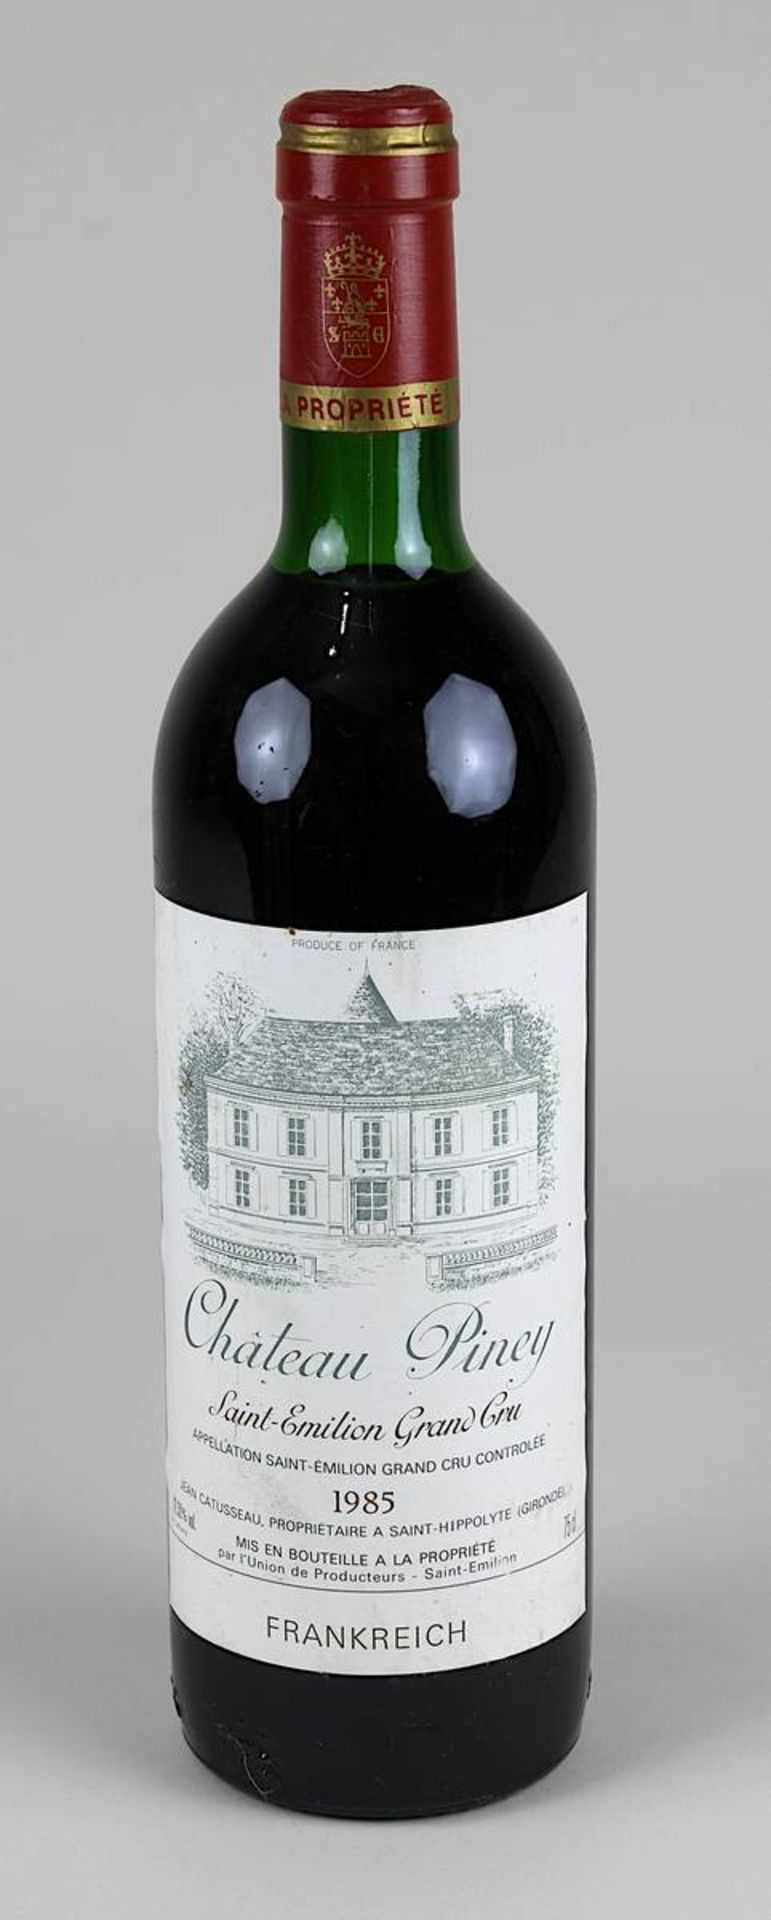 Eine Flasche 1985er Château Piney, Saint-Emilion Grand Cru, Saint-Hippolyte Gironde, Füllhöhe: obere